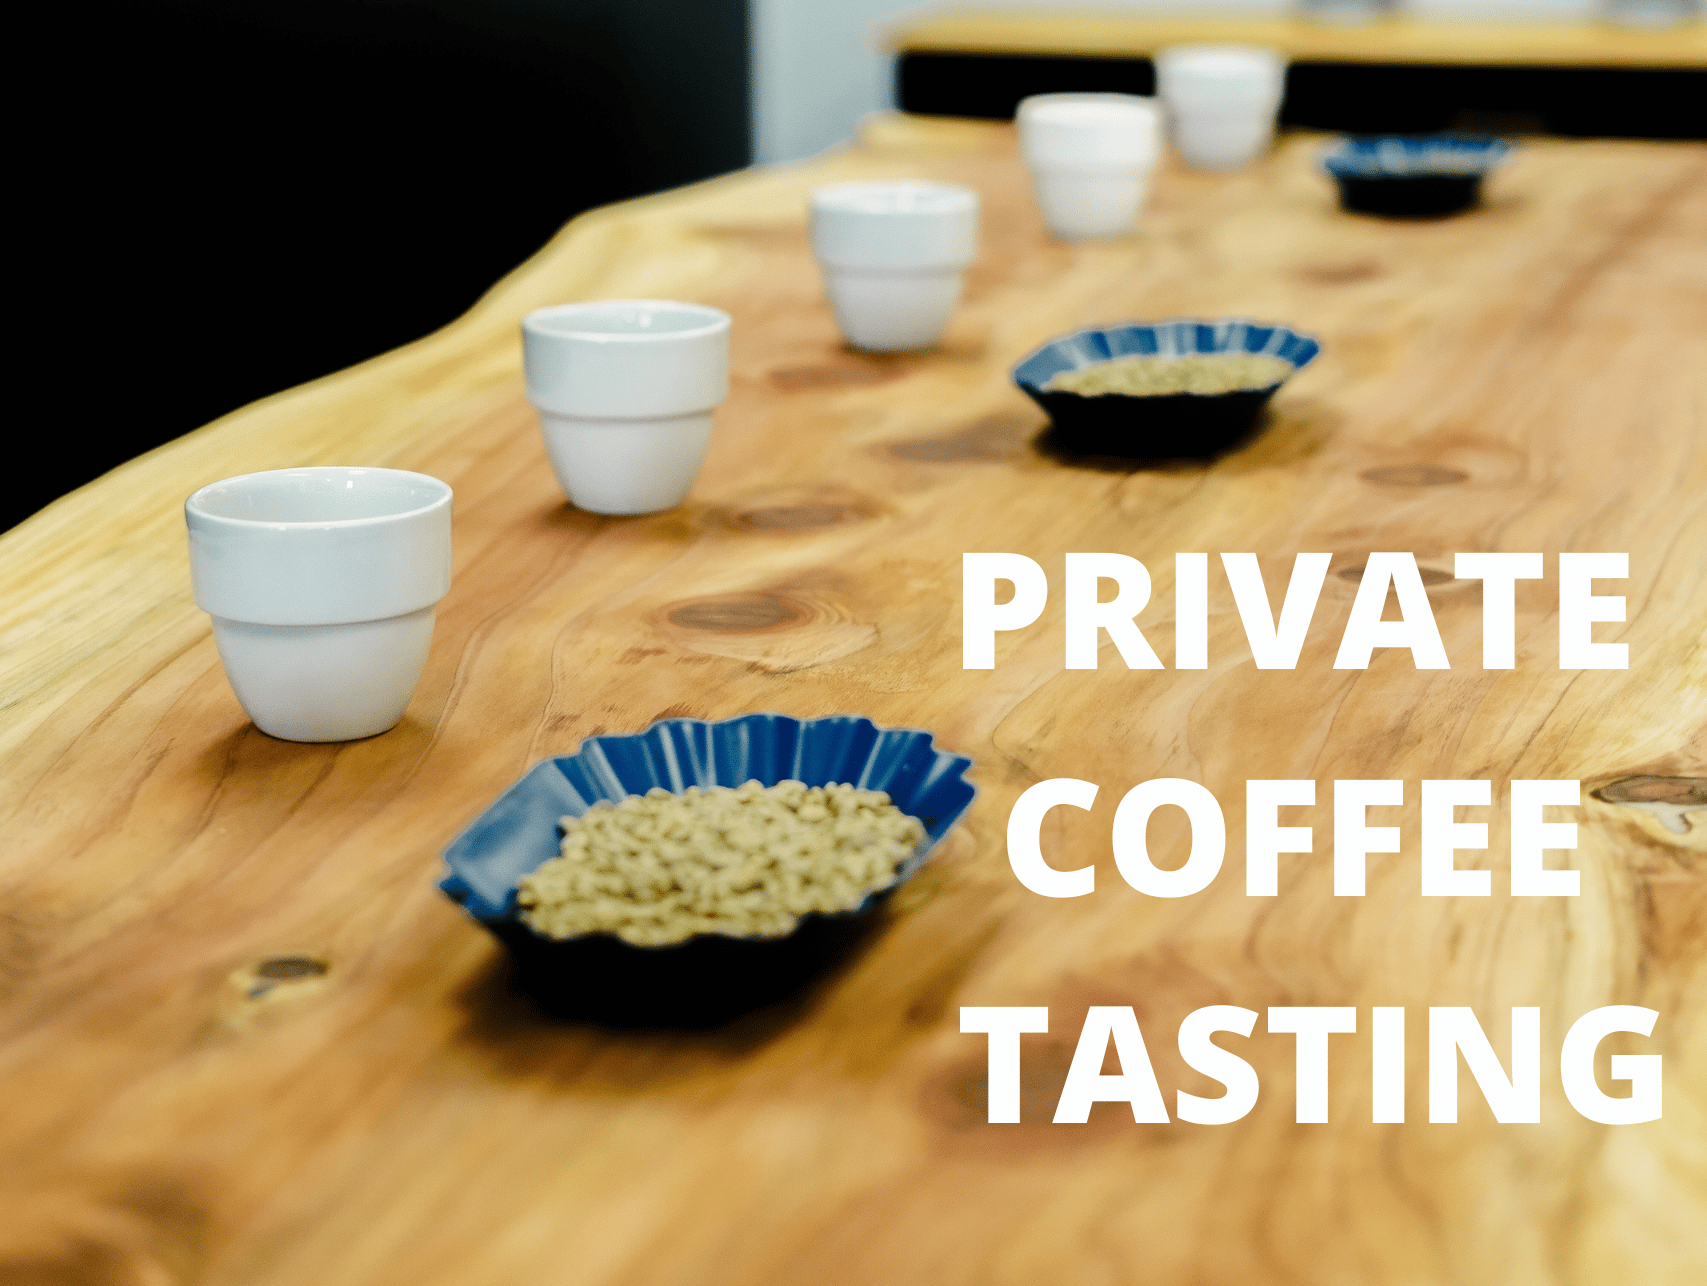 PRIVATE COFFEE TASTING